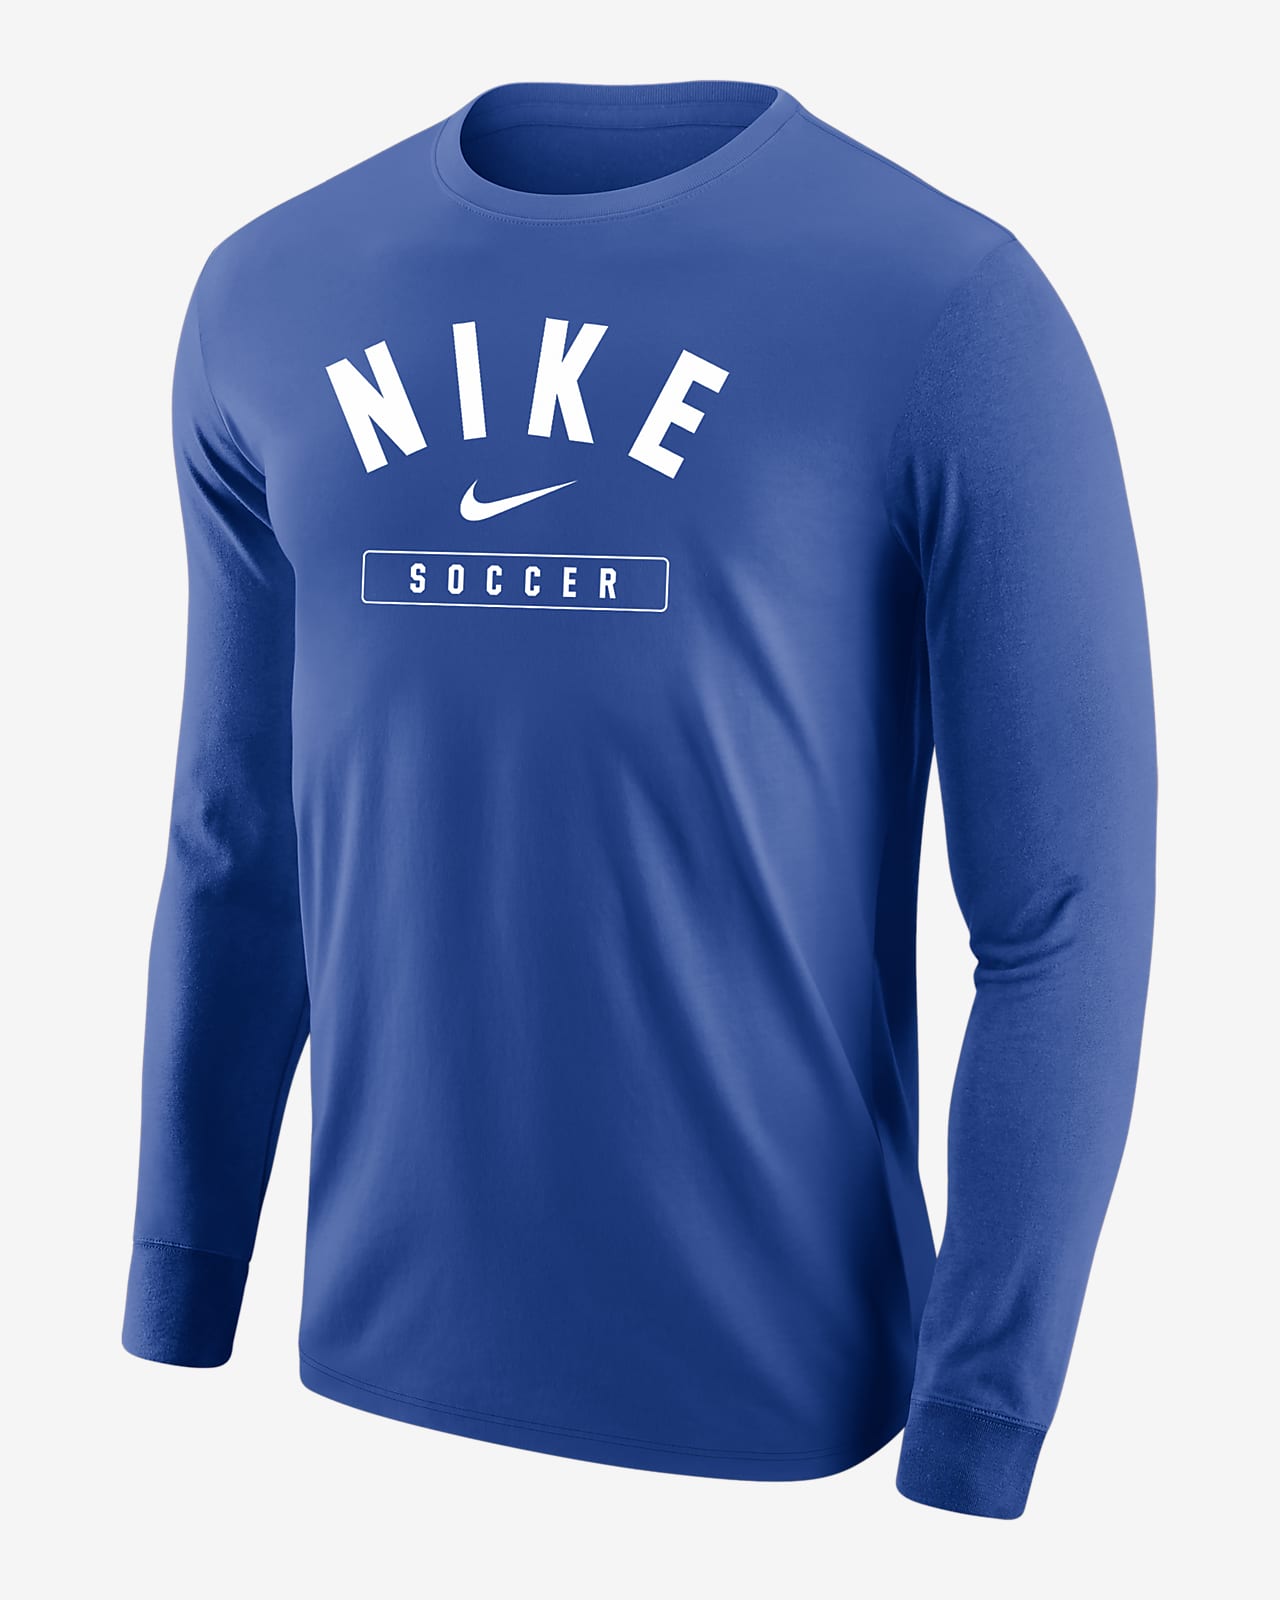 Nike Swoosh Men's Soccer Long-Sleeve T-Shirt